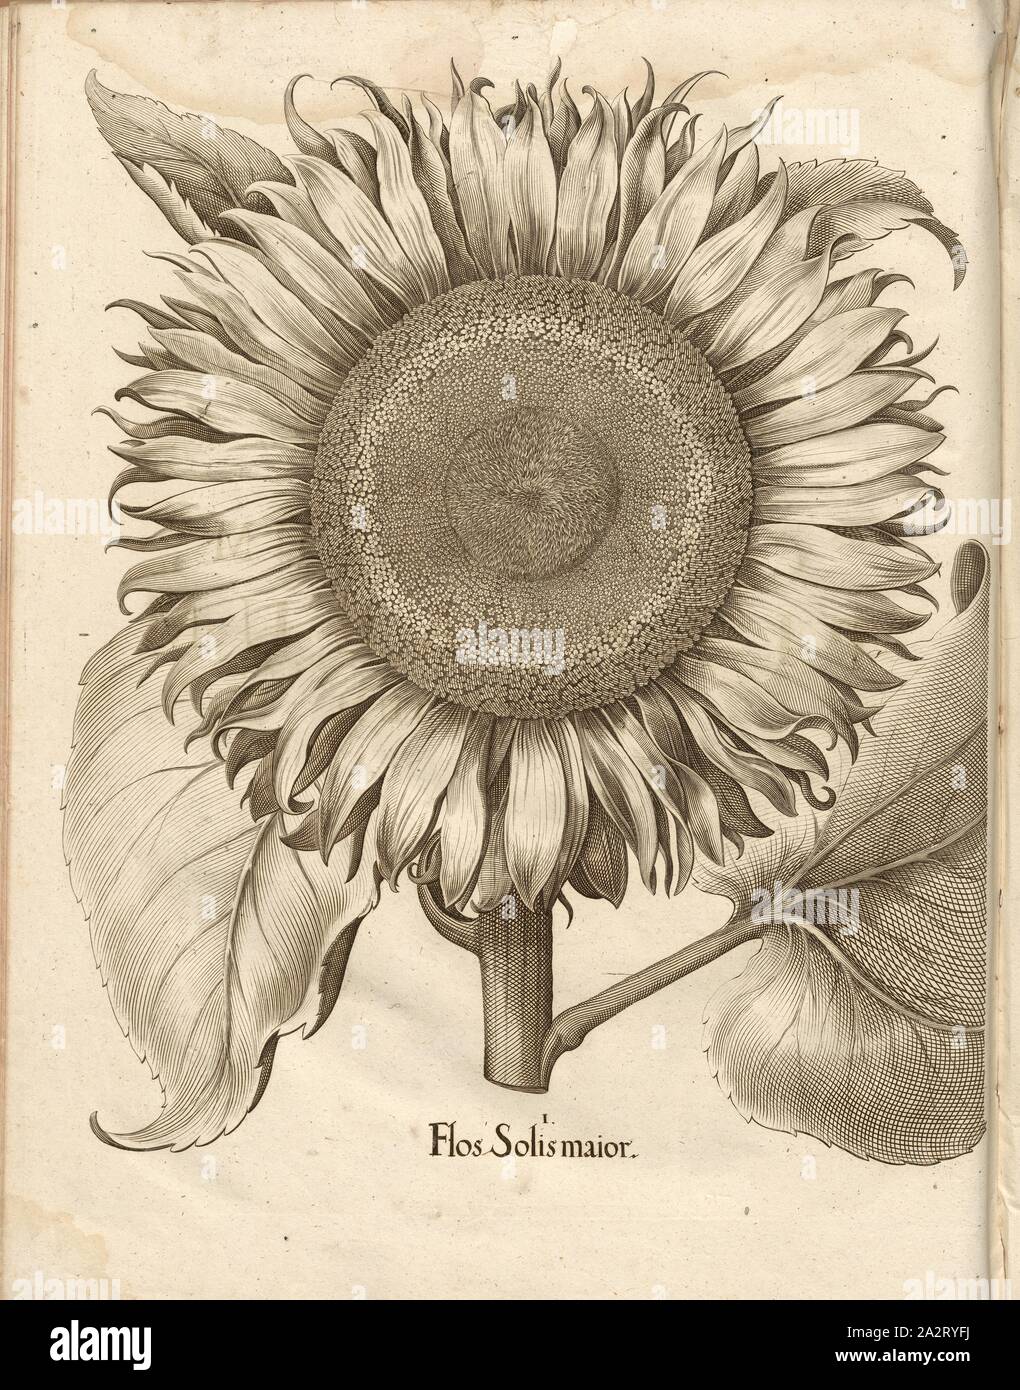 Flos Solis major, Sunflower, Copper Engraving, p. 450, Besler, Basilius; Jungermann, Ludwig, 1713, Basilius Besler: Hortus Eystettensis (...). Nürnberg, 1713 Stock Photo